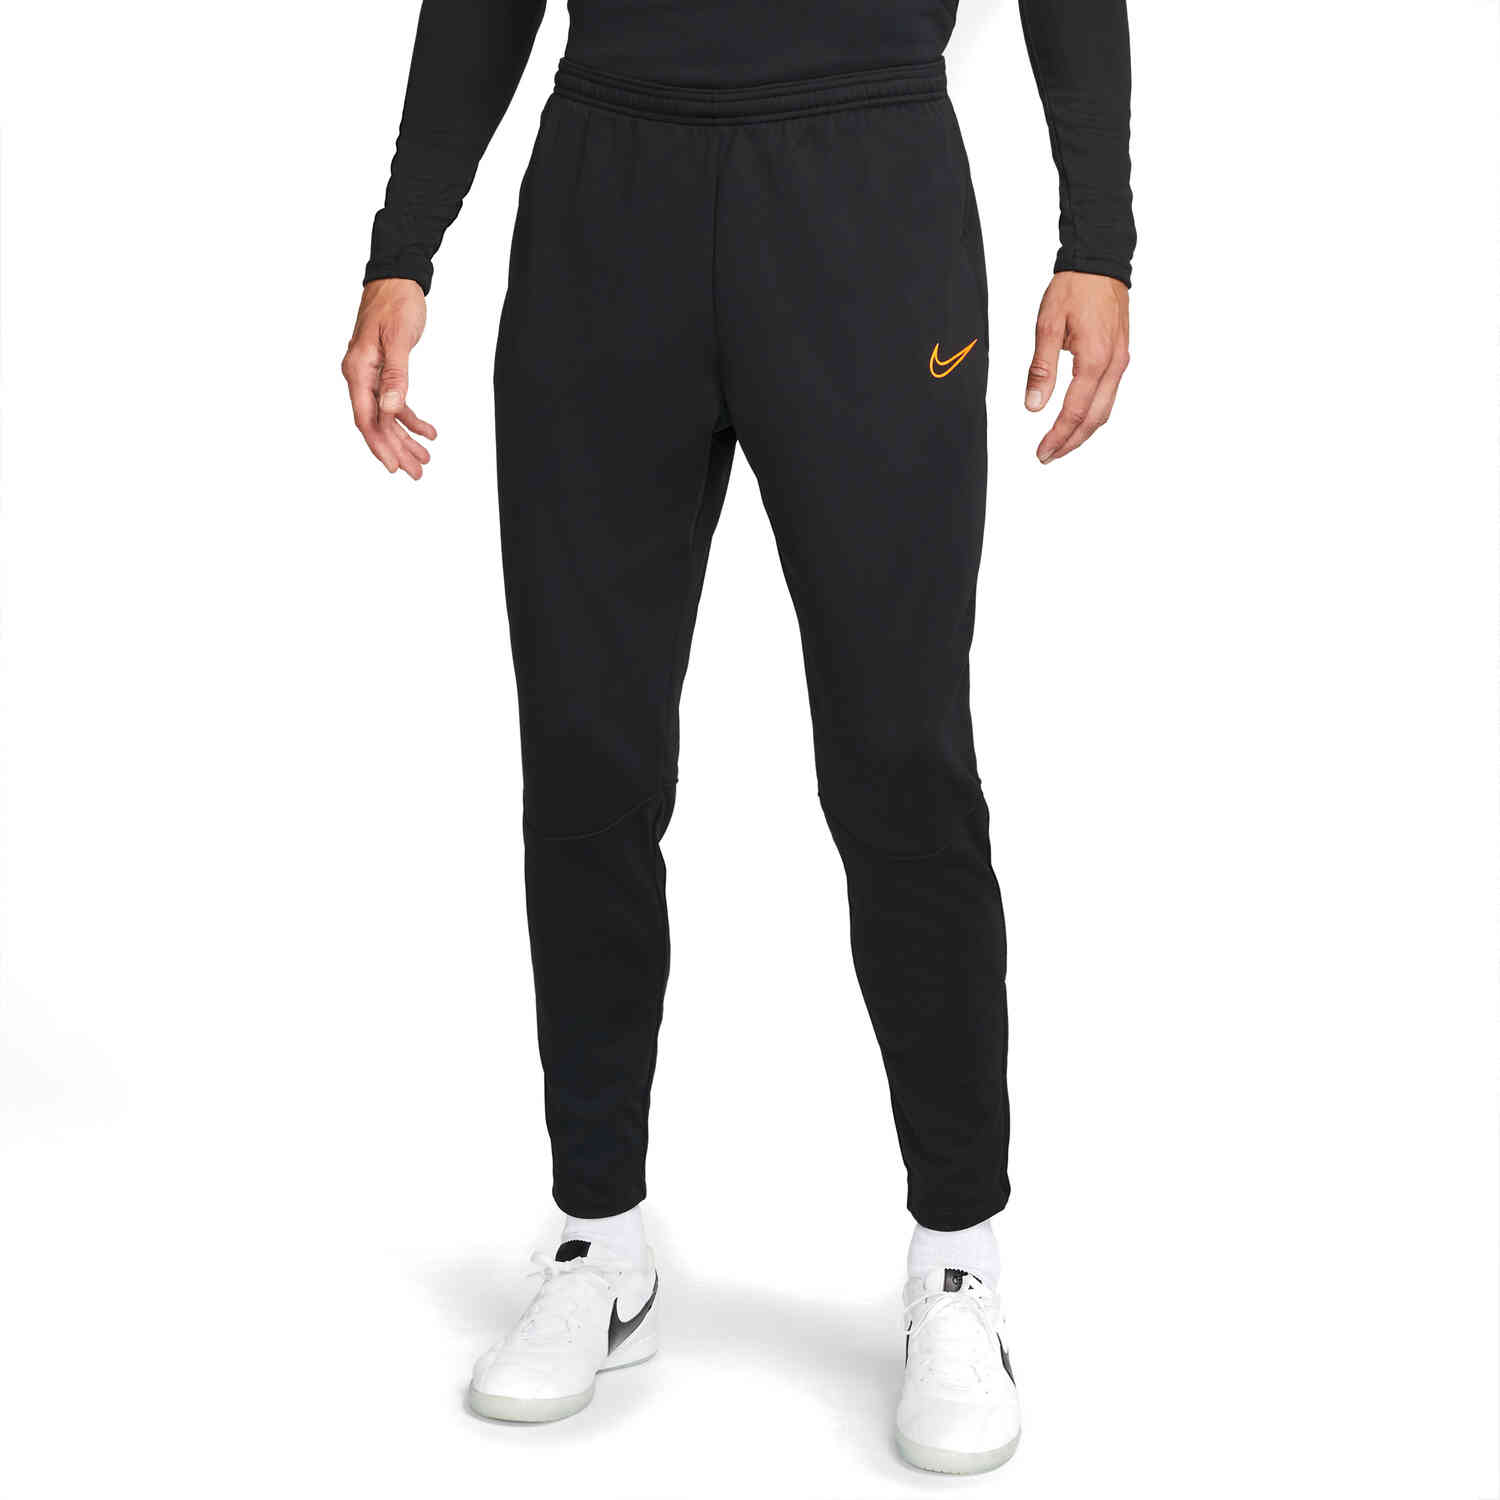 Beca Sip Maligno Nike Winter Warrior Academy Training Pants - Black/Total Orange - Soccer  Master